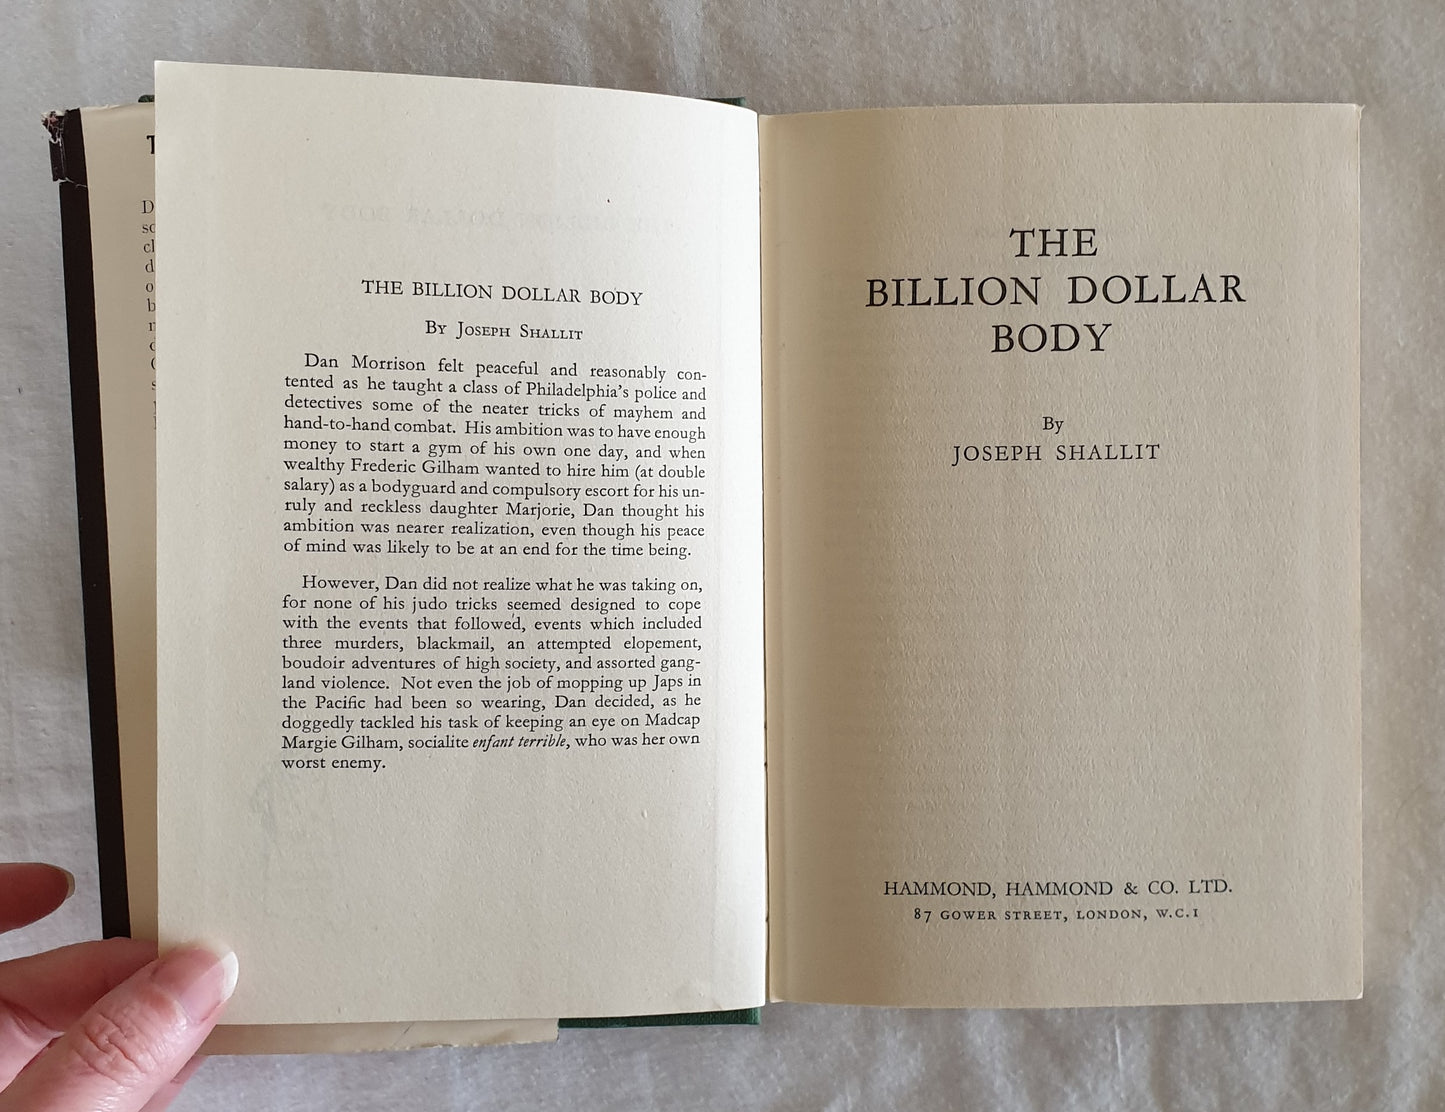 The Billion Dollar Body by Joseph Shallit